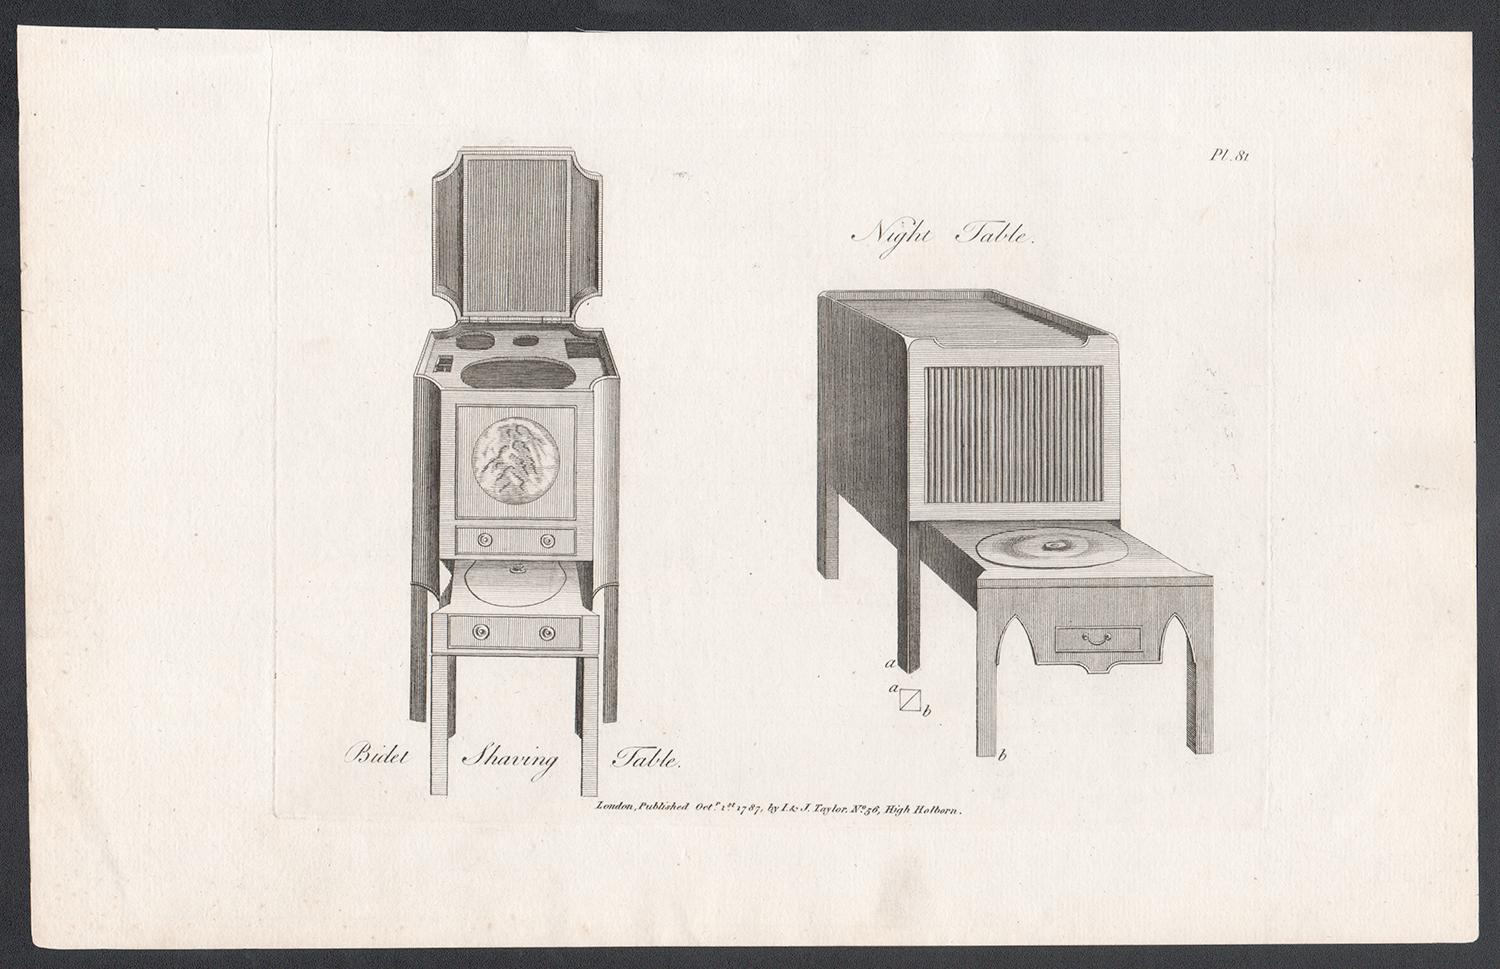 Bidet Shaving and Night Tables, Hepplewhite Georgian furniture design engraving - Print by George Hepplewhite